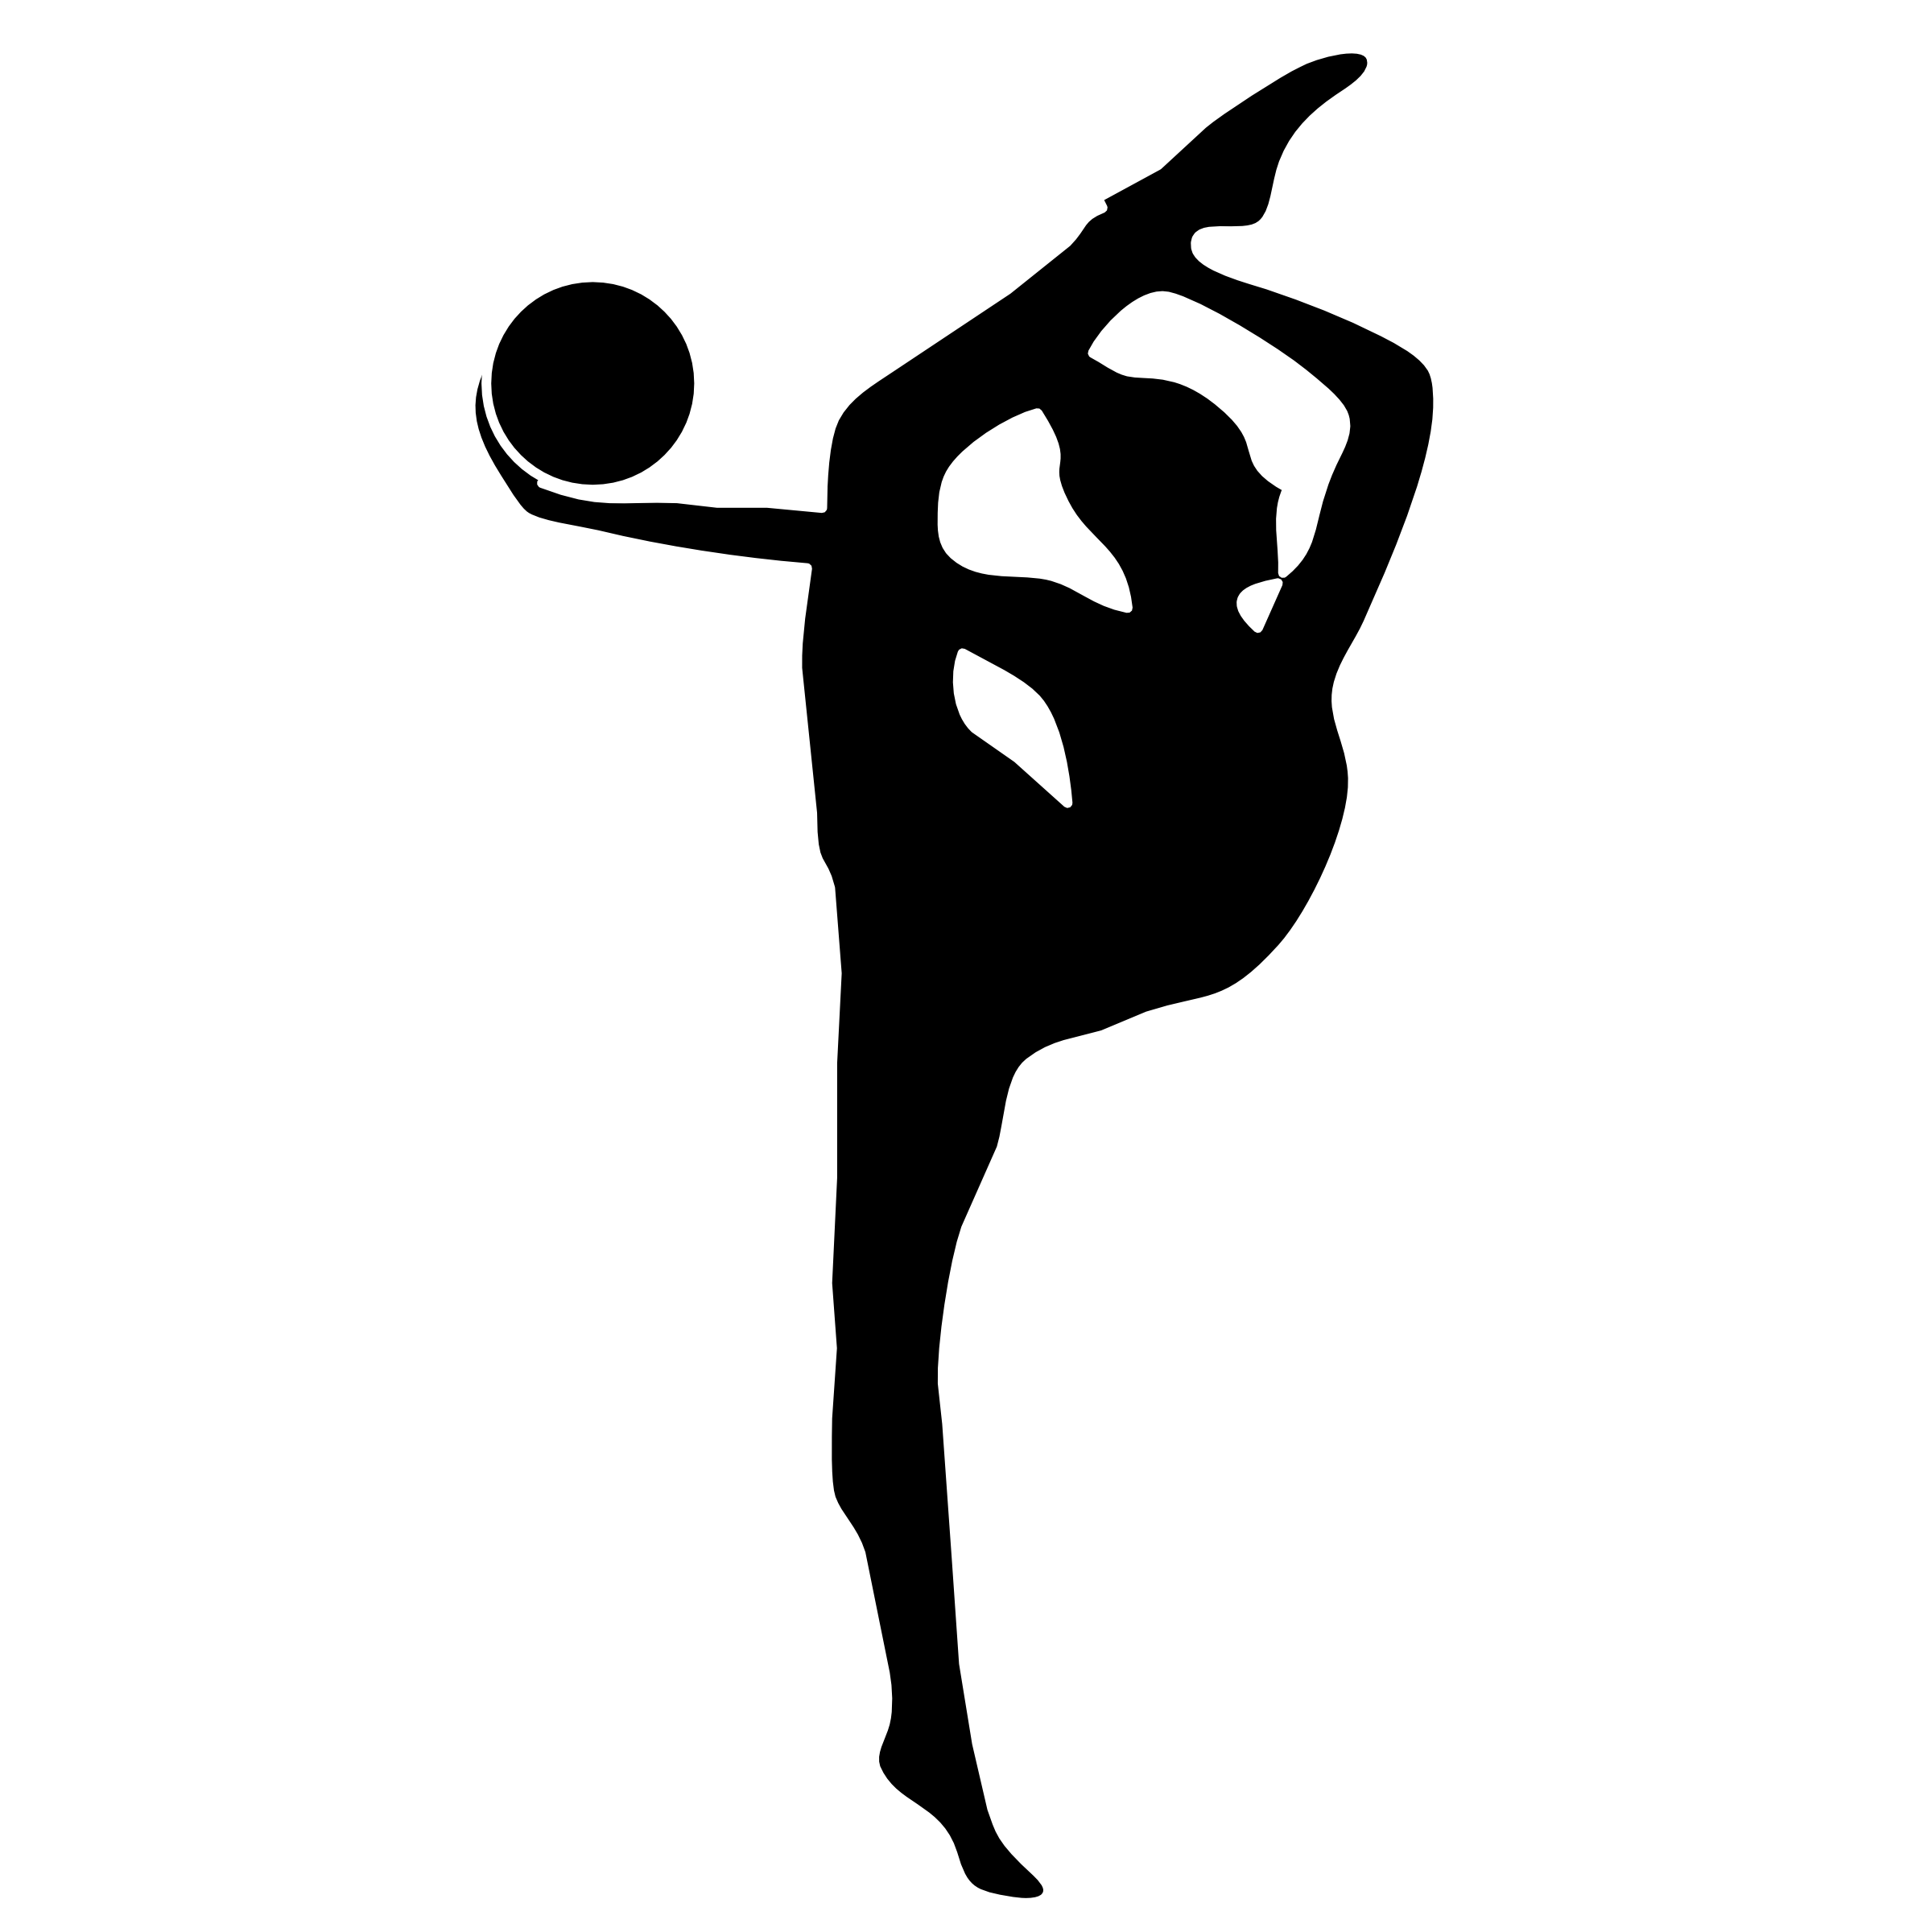 Rhythmic gymnastics silhouette Royalty Free Vector Image